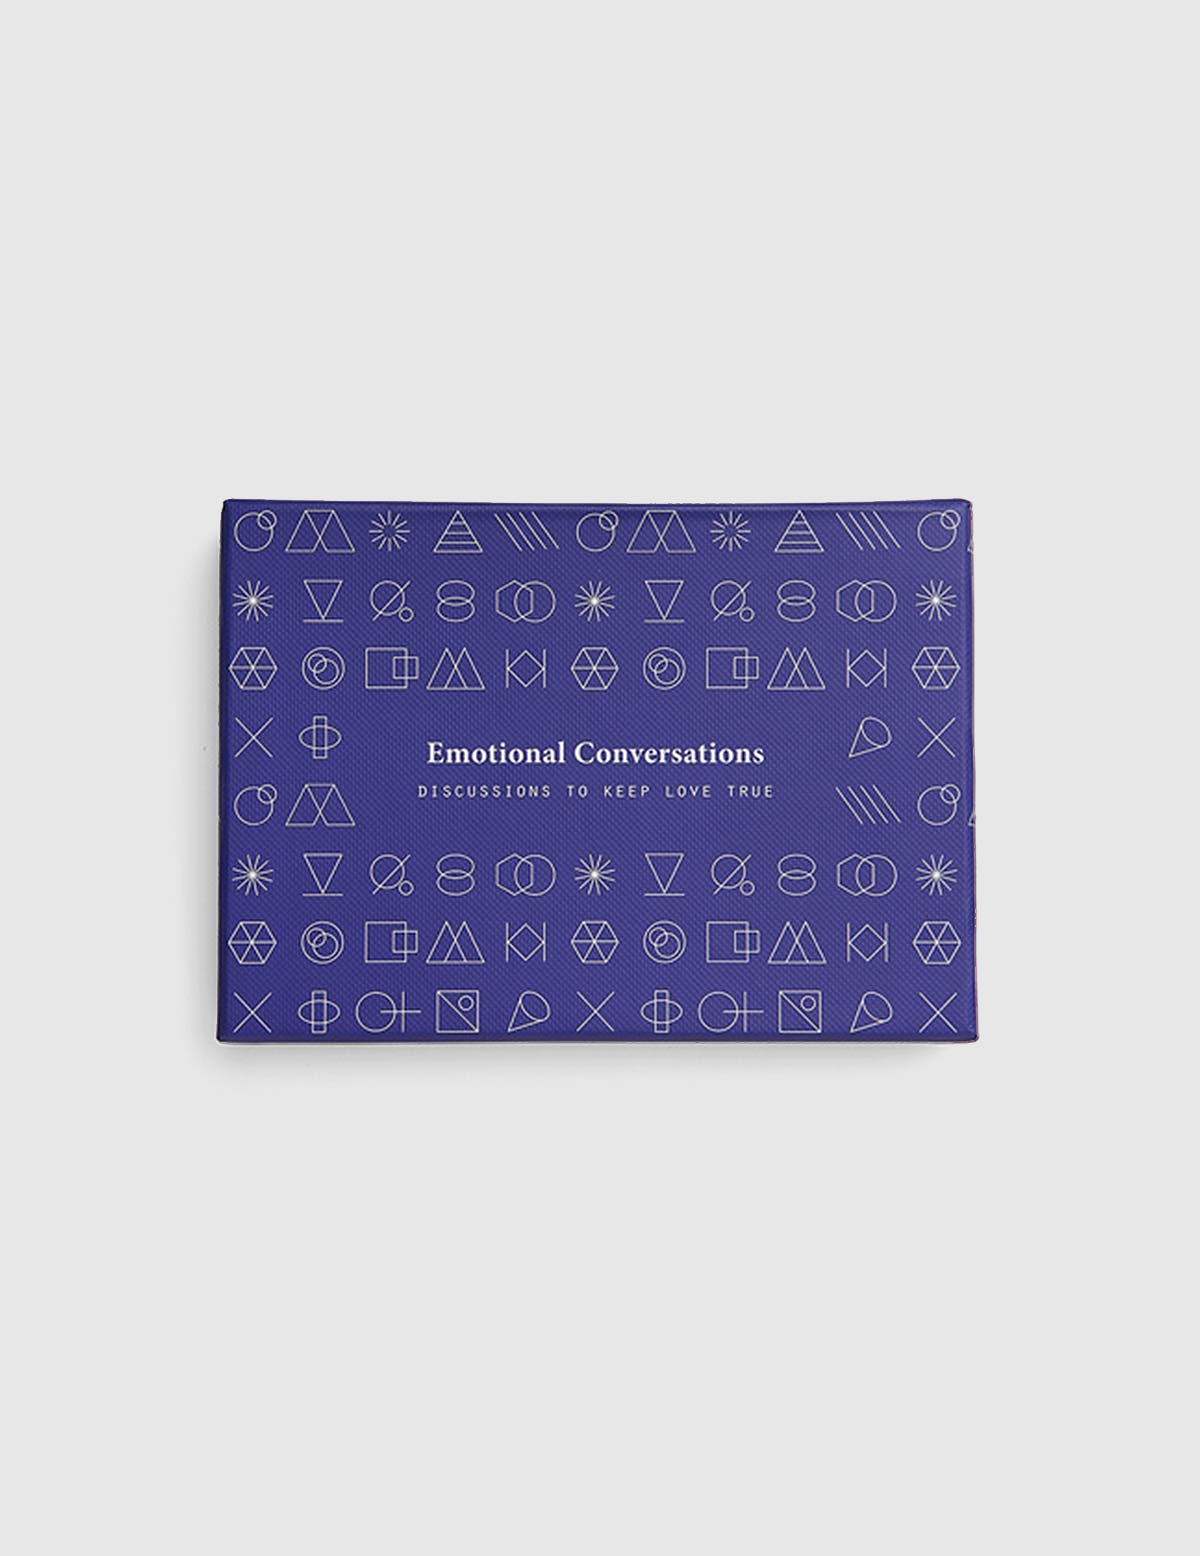 Emotional conversation cards